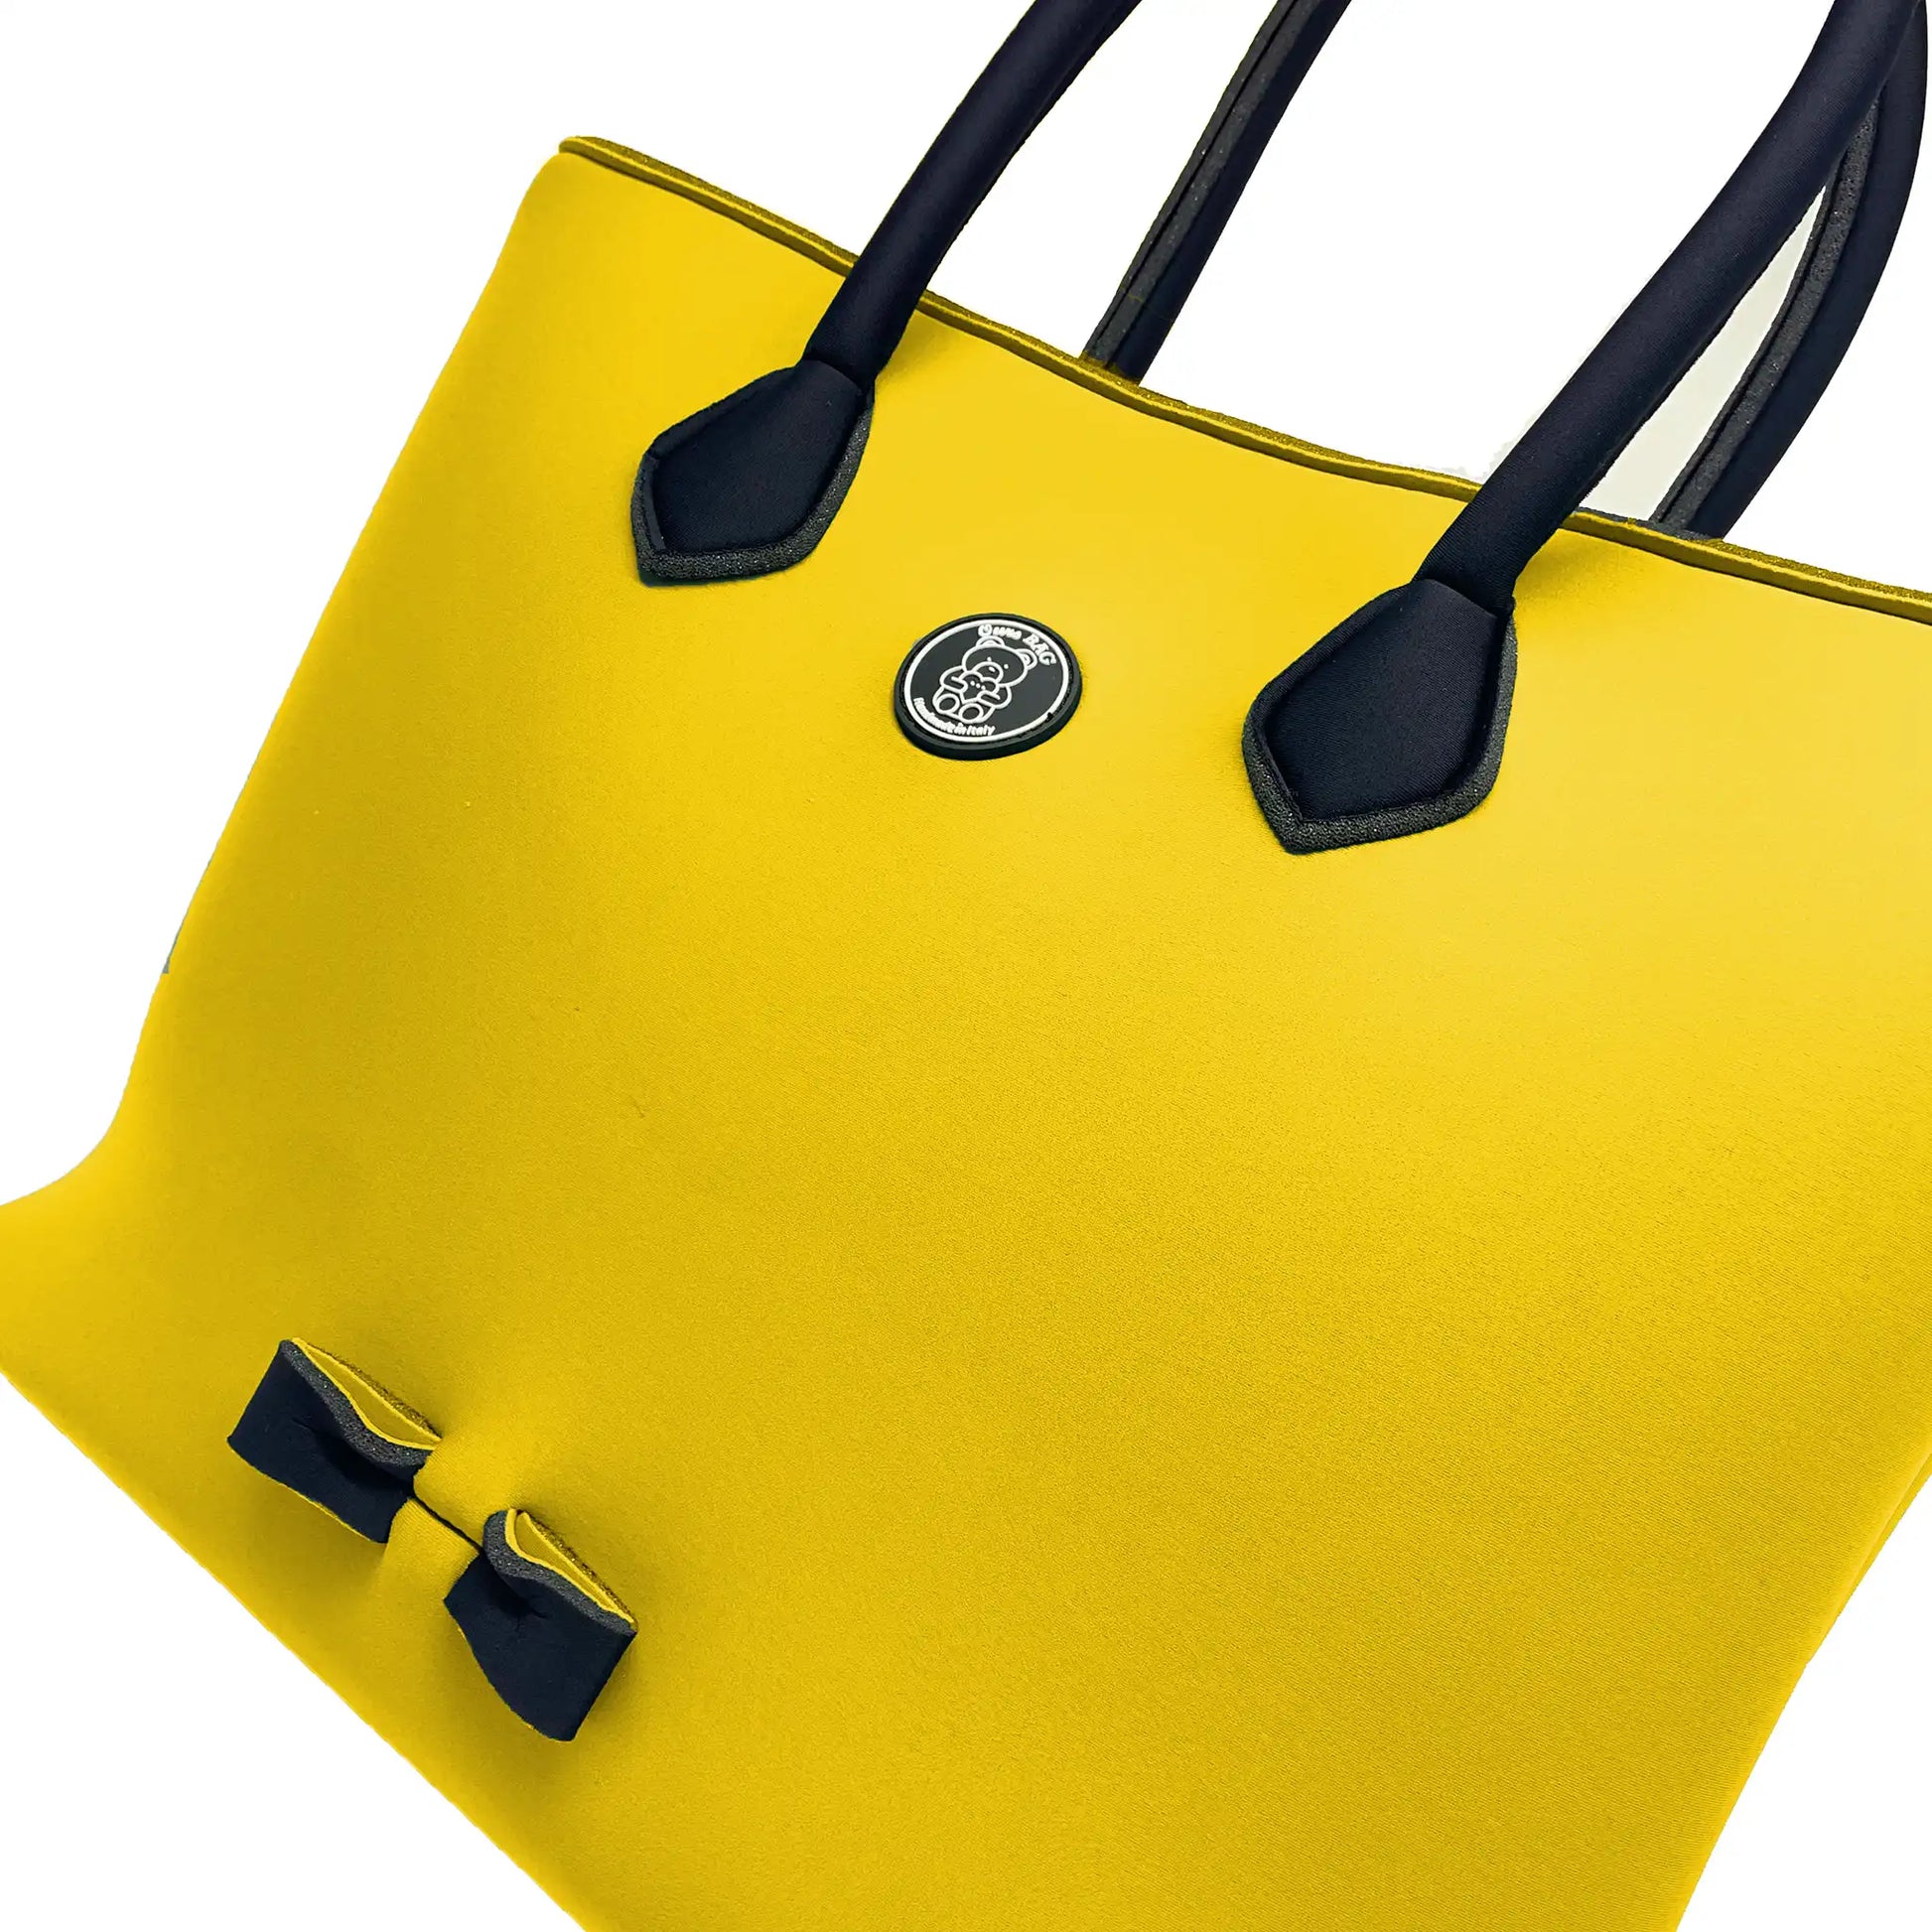 Borsa Shopping con Maniglie Yellow | Ours Bag